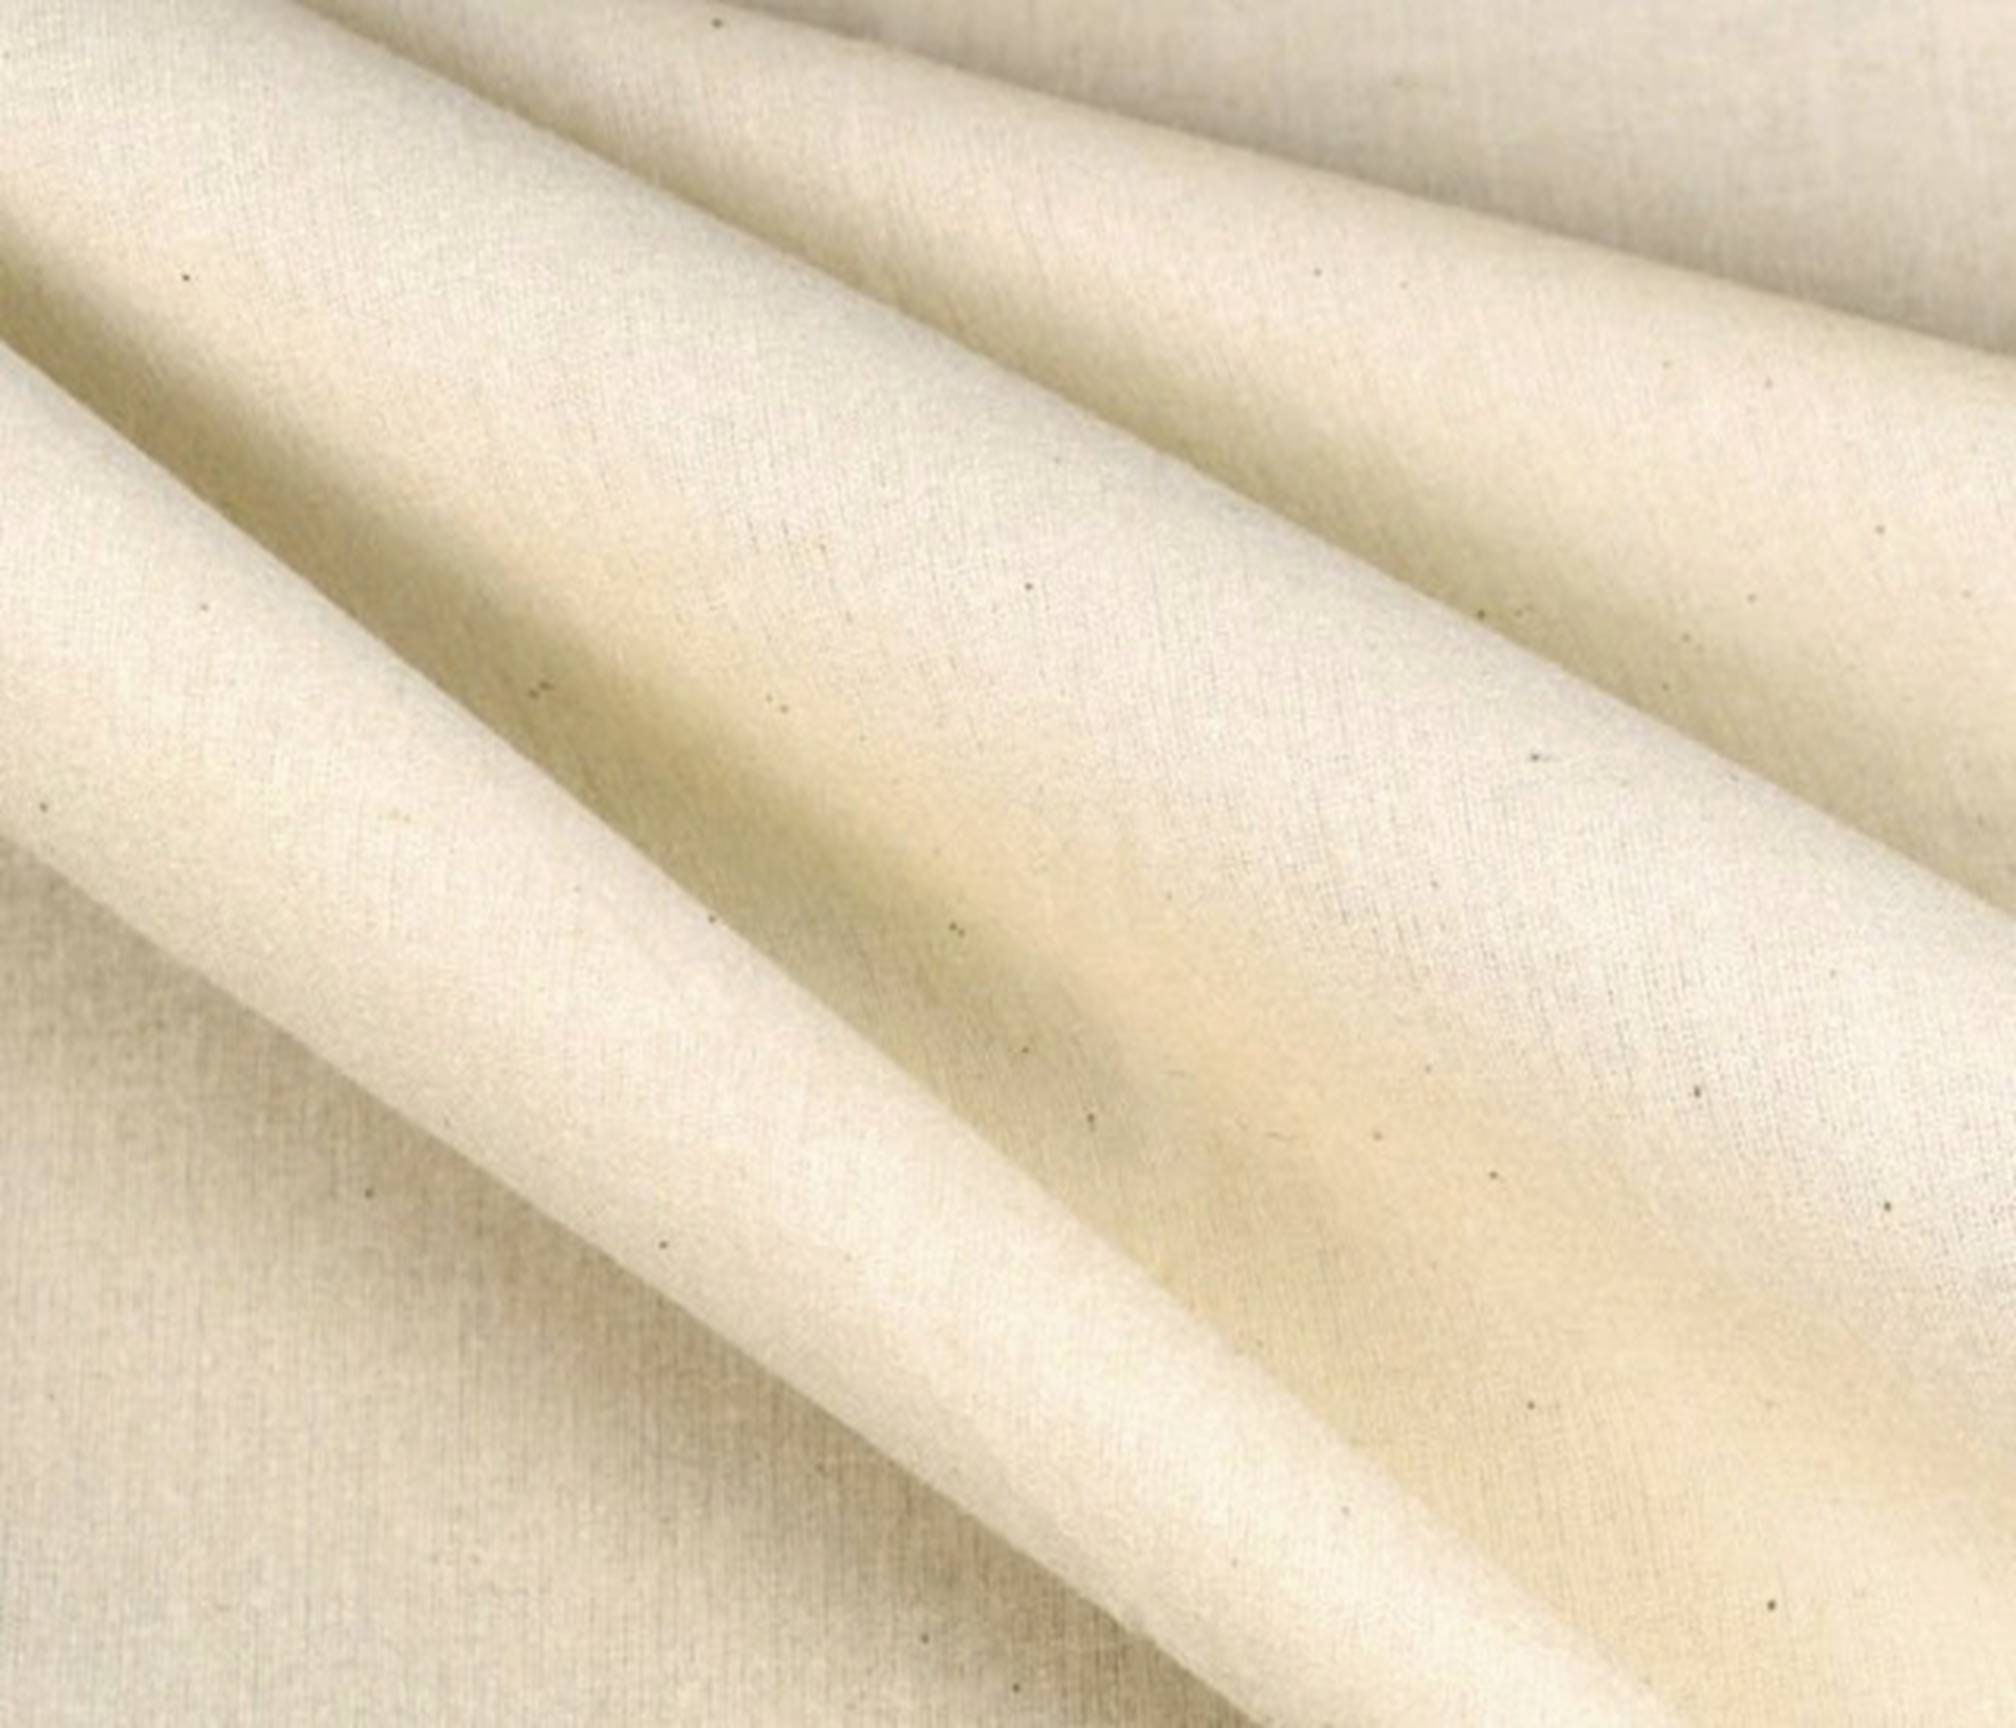 FabricLA 100% Cotton Muslin Fabric - 62 Inches (157 cm) Wide Unbleached Muslin Cloth - Cotton Muslin Fabric by Yard - Natural Muslin Fabric, 2